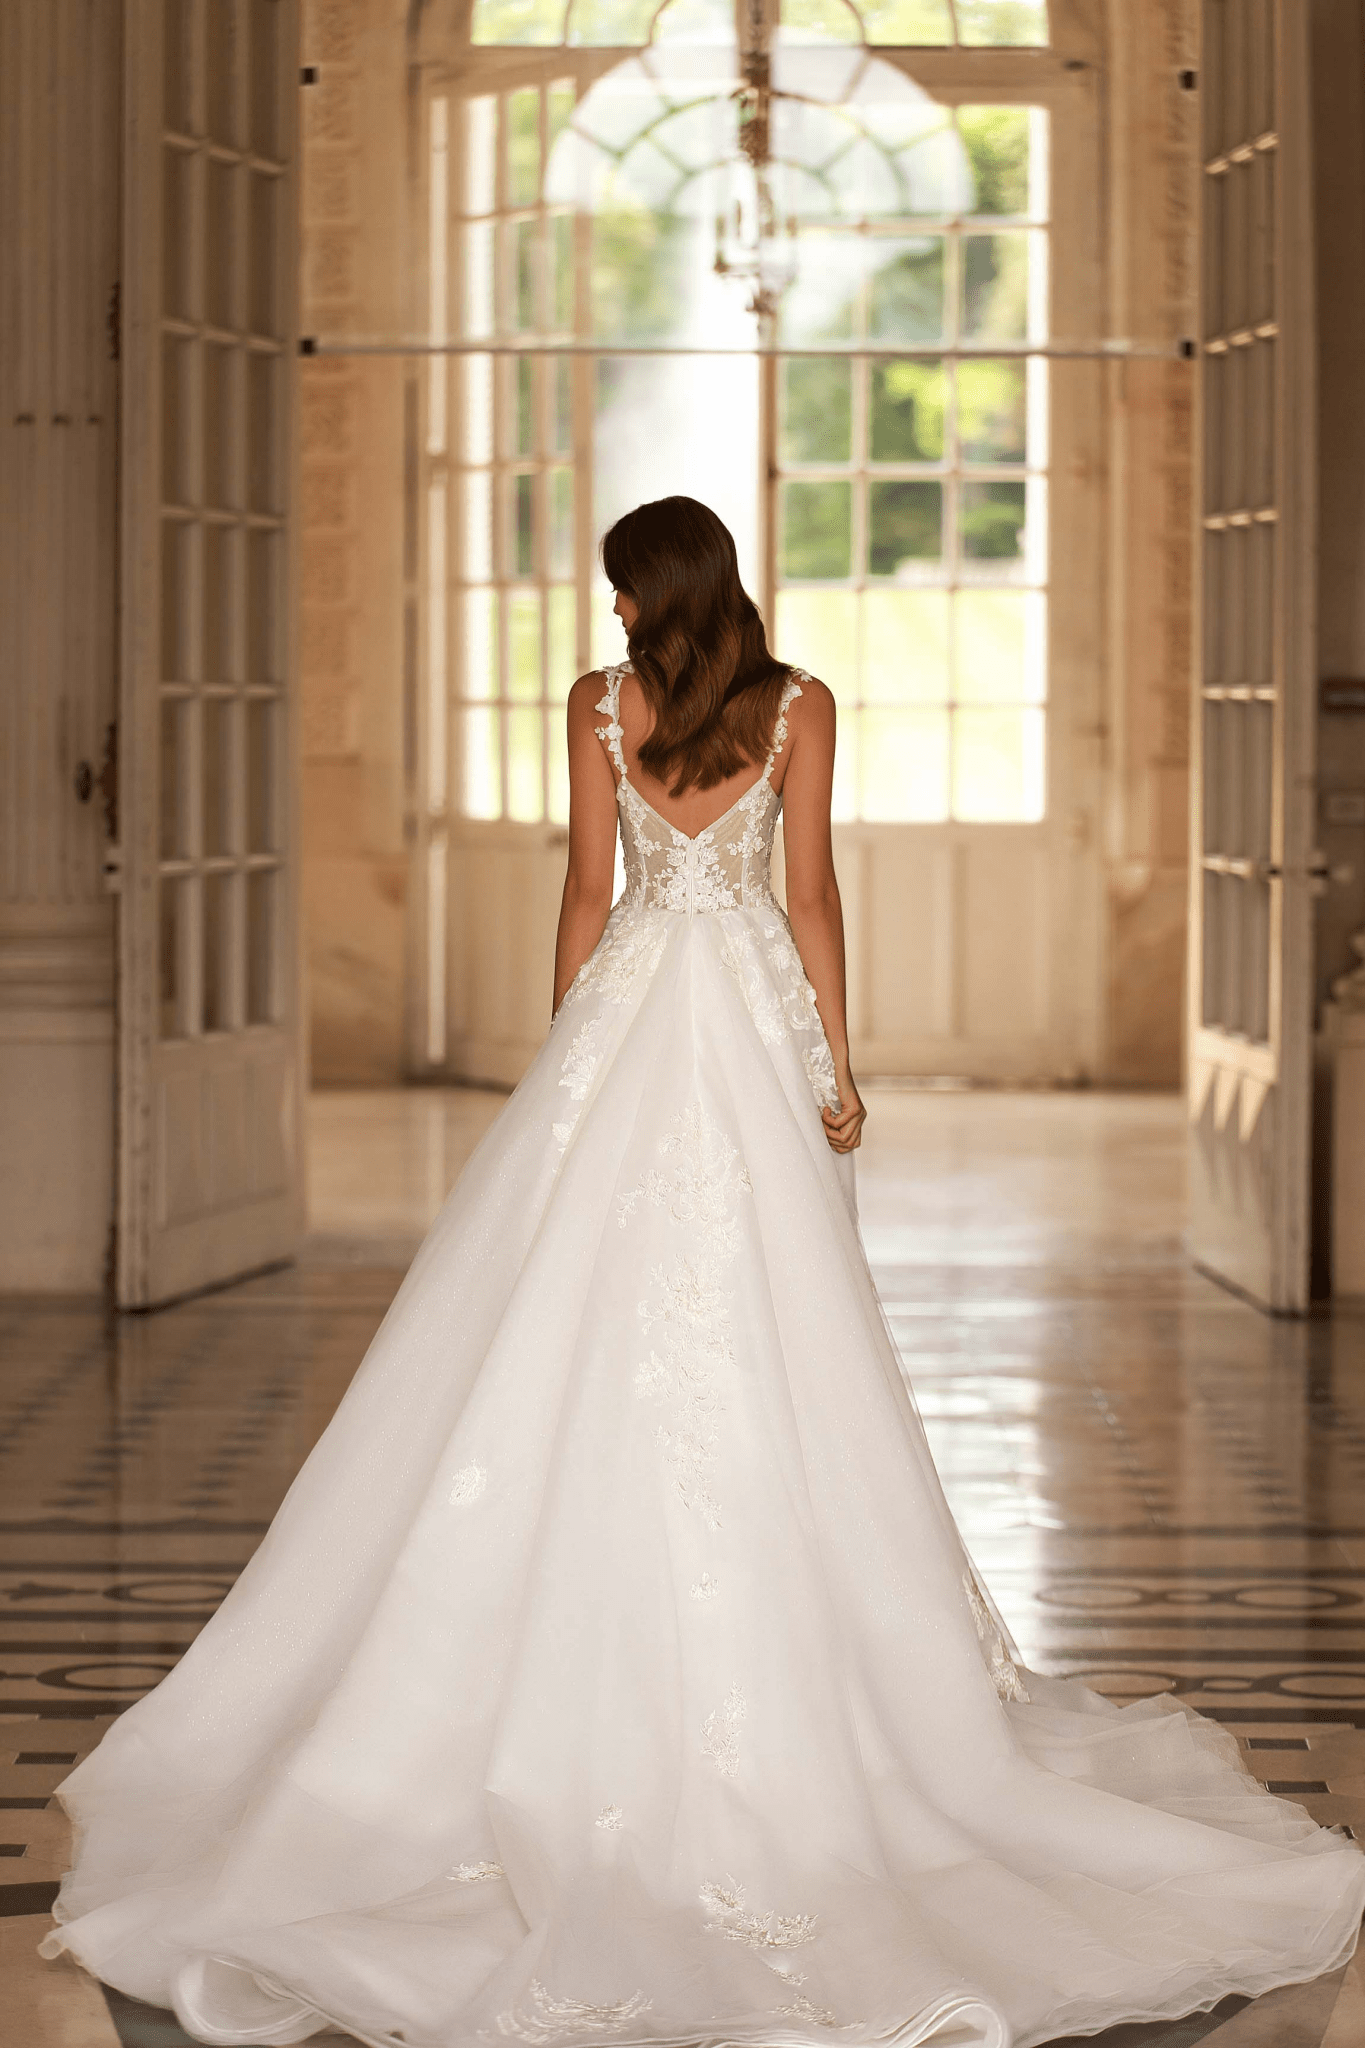 Ivory Aline Ball Gown Wedding Dress - Floral Wedding Dress with Train - Wedding Dress with Straps and Lace Plus Size - WonderlandByLilian